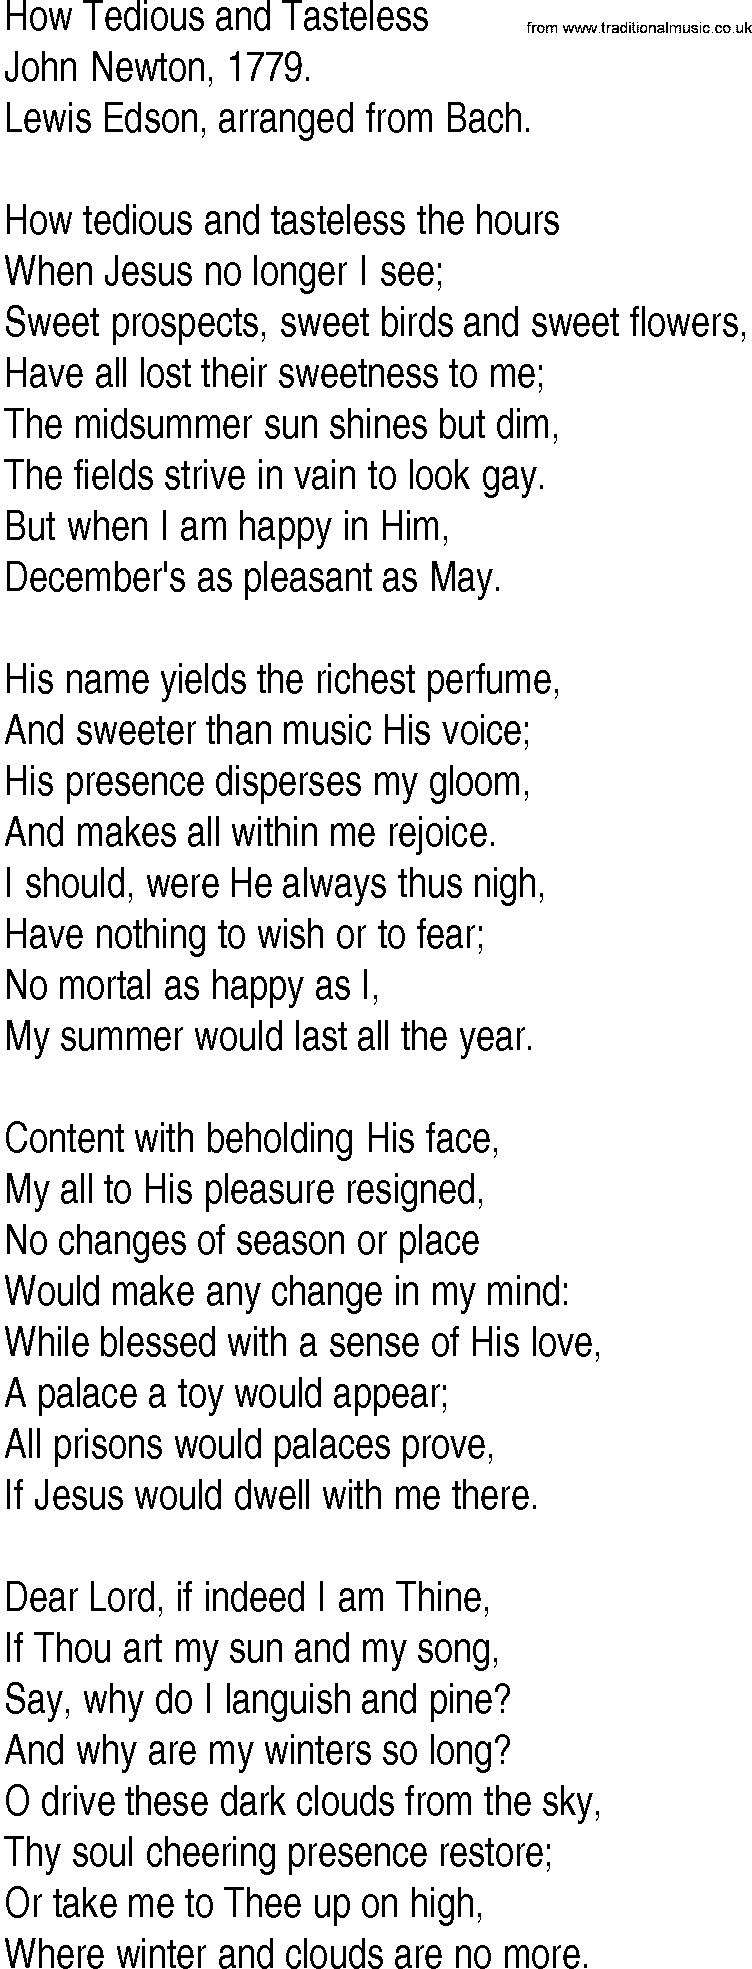 Hymn and Gospel Song: How Tedious and Tasteless by John Newton lyrics